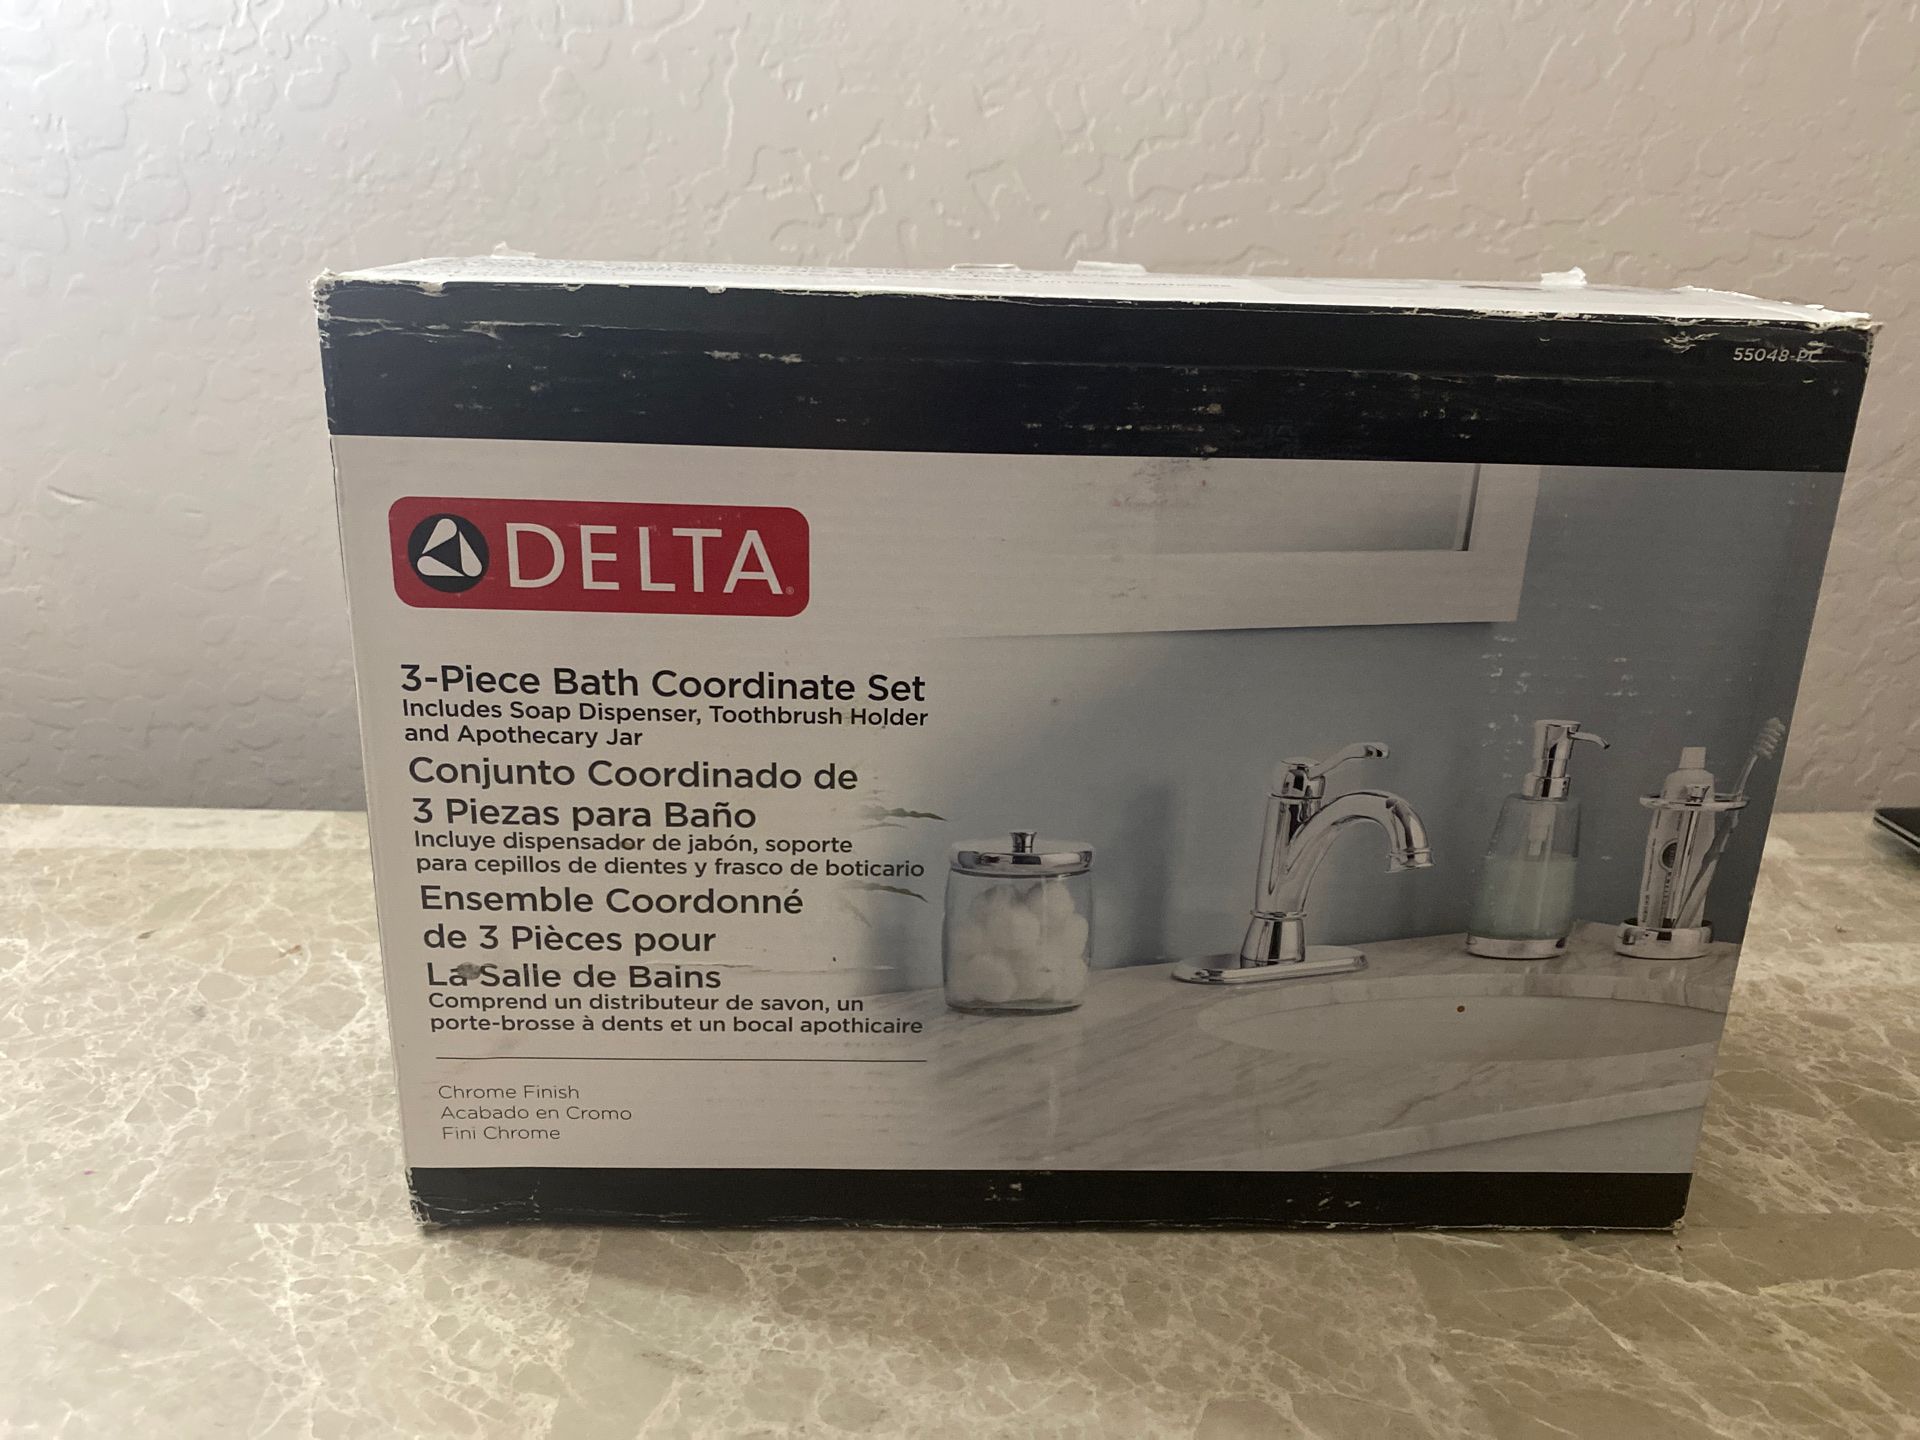 Delta 3-piece bath coordinate set